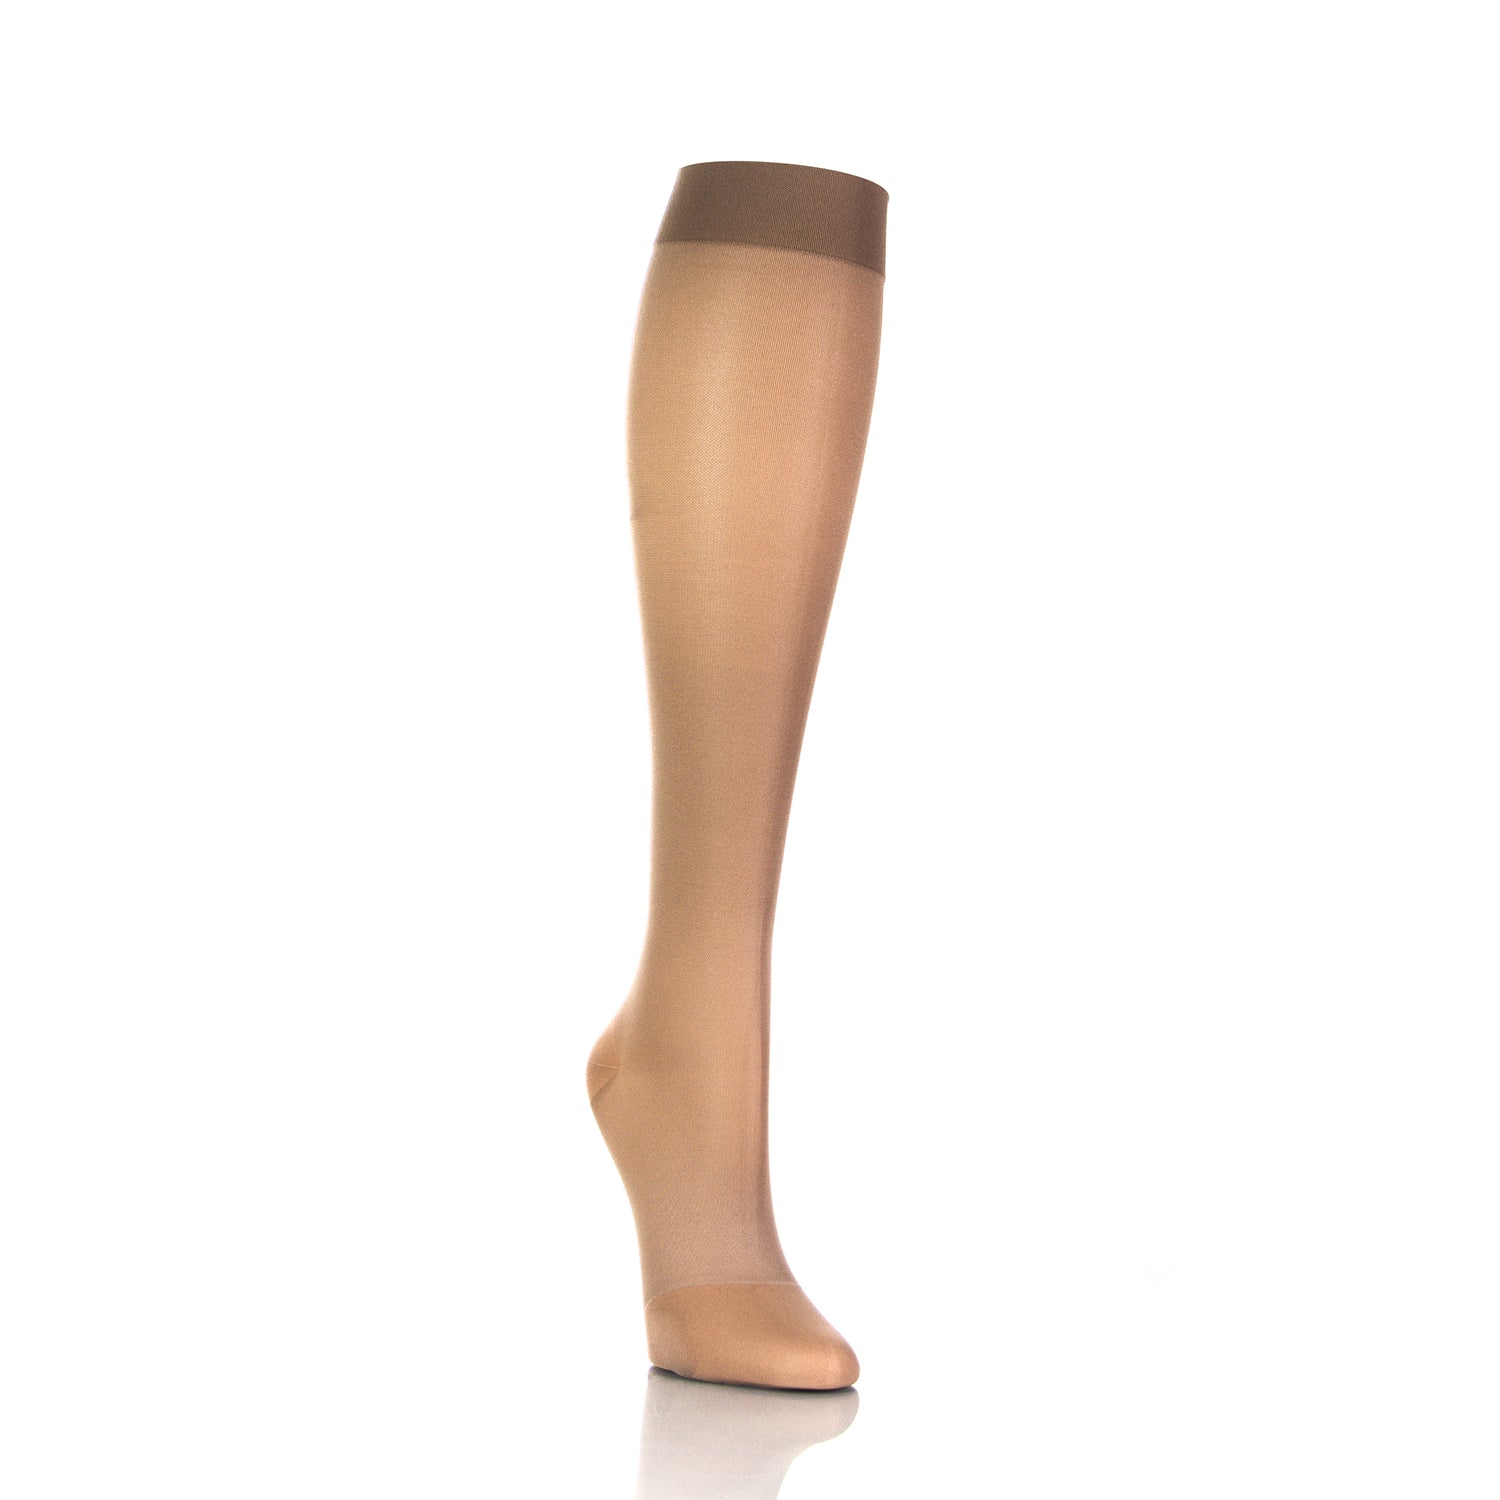 Compression Socks For Women  Knee High - 20 30 mmHg - Closed Toe – Doctor  Brace